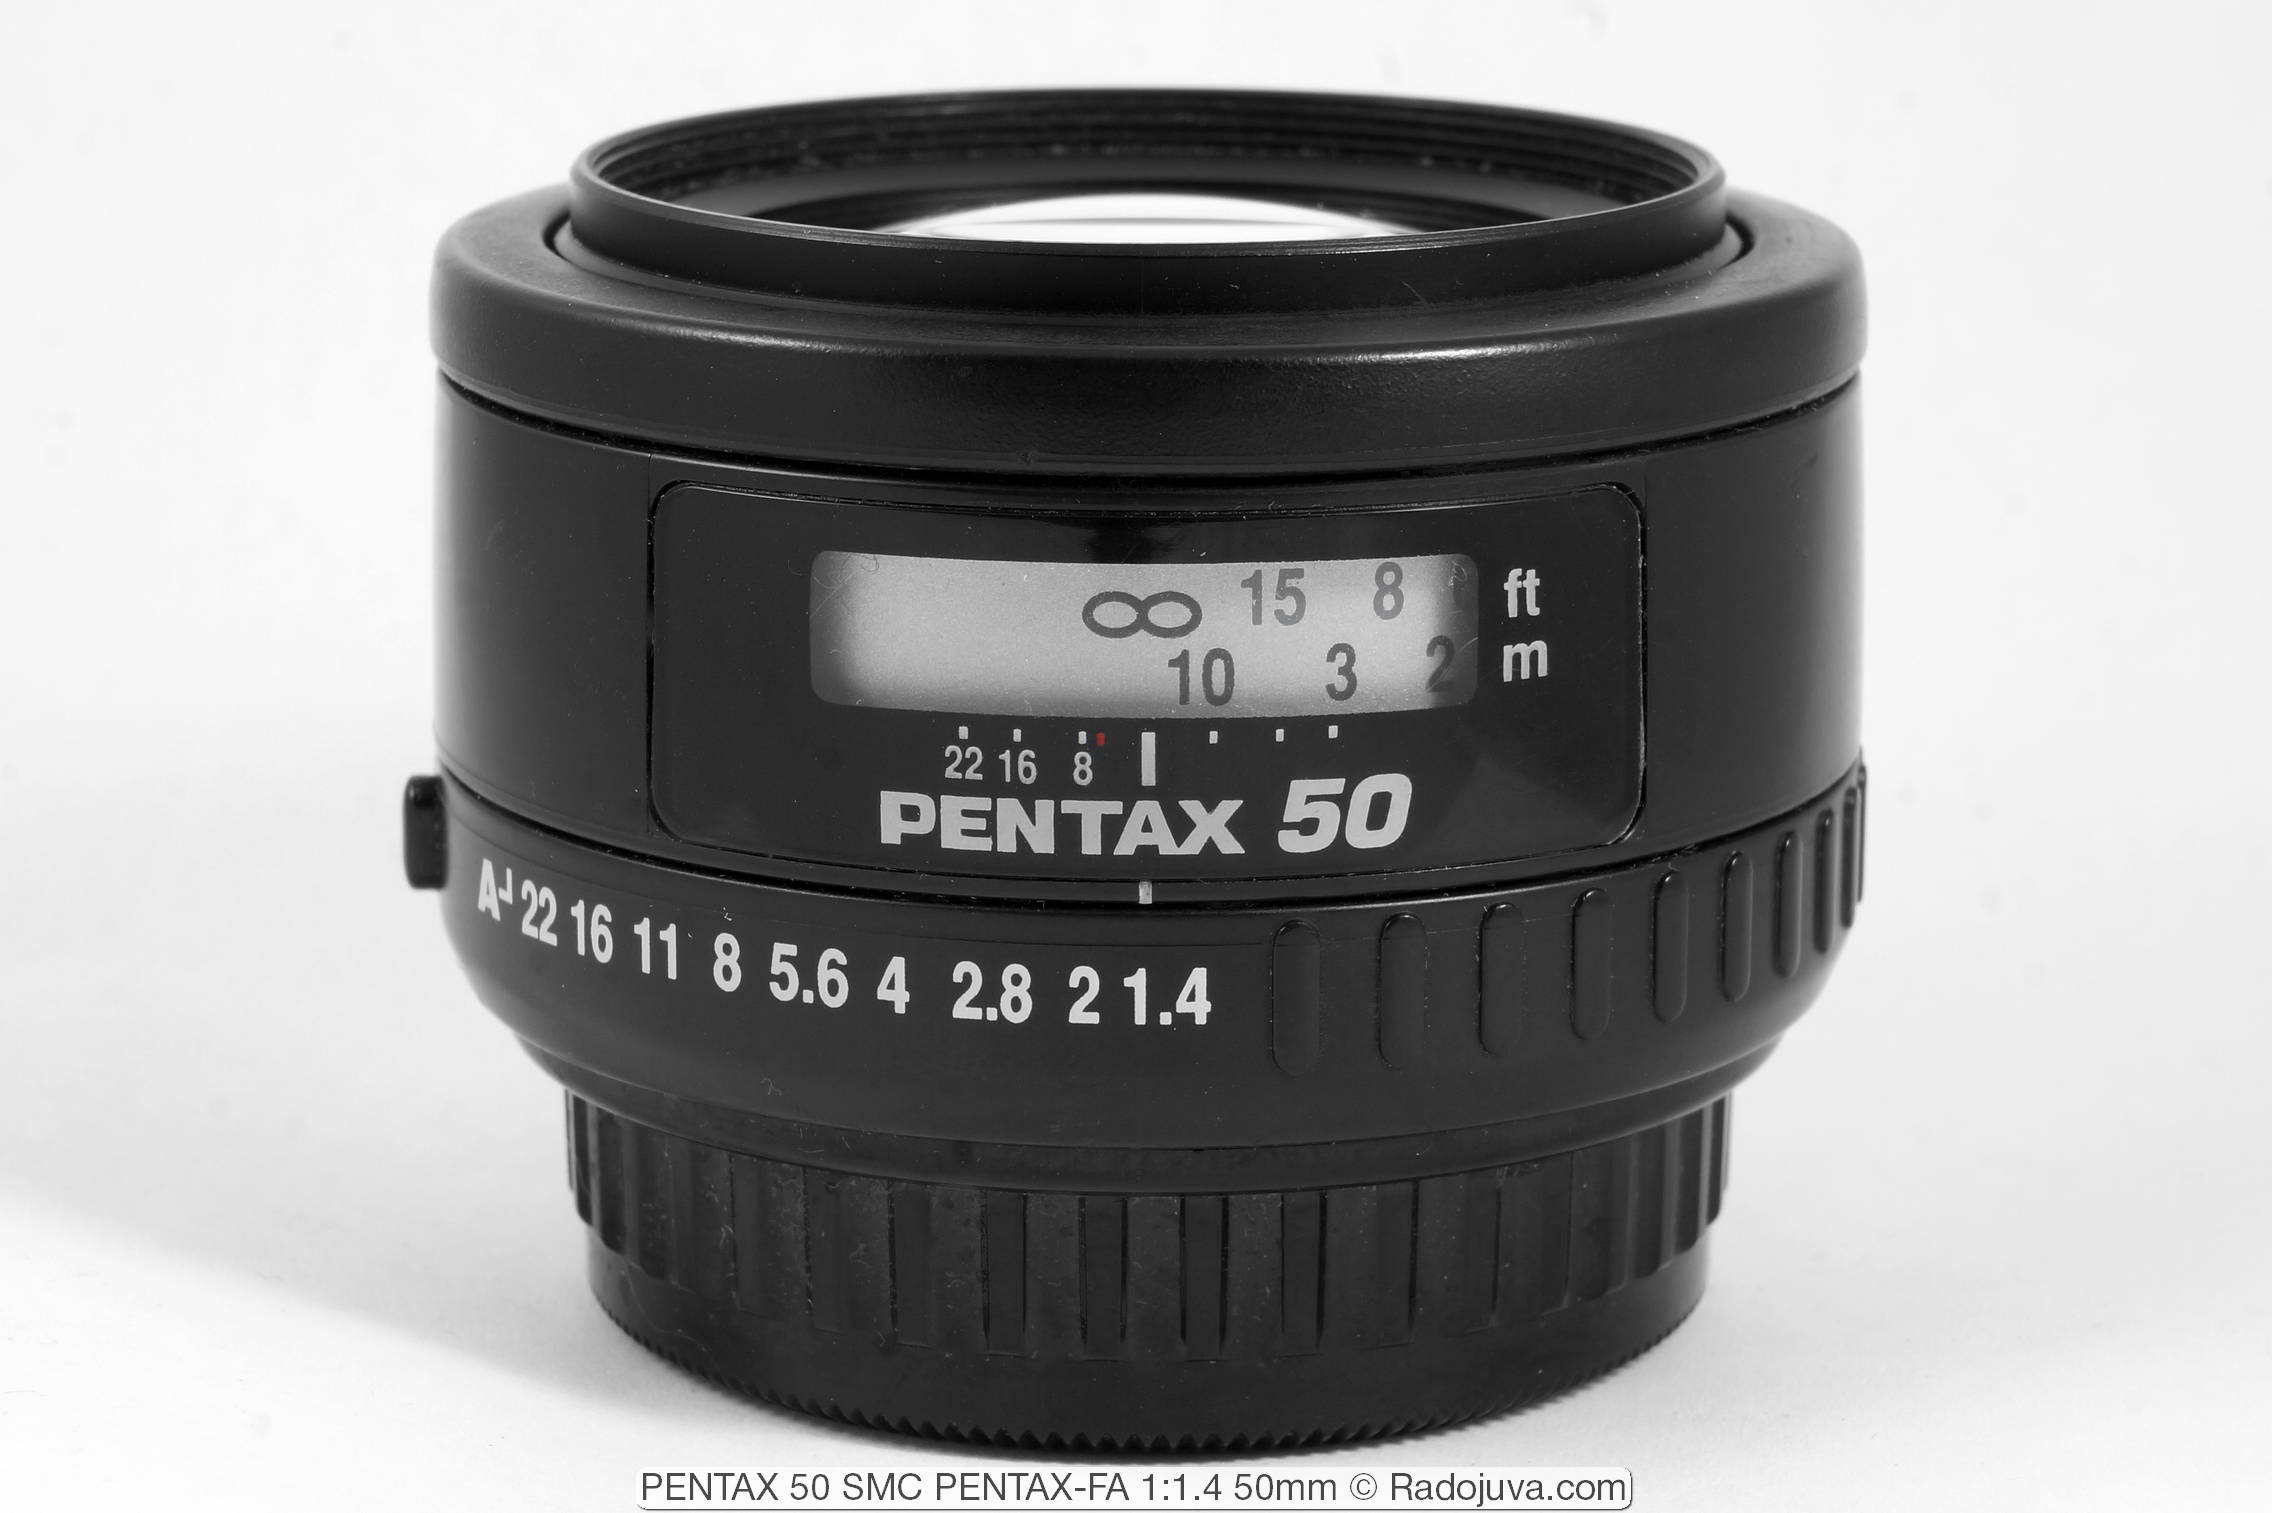 PENTAX 50 SMC PENTAX-FA 1:1.4 50 mm